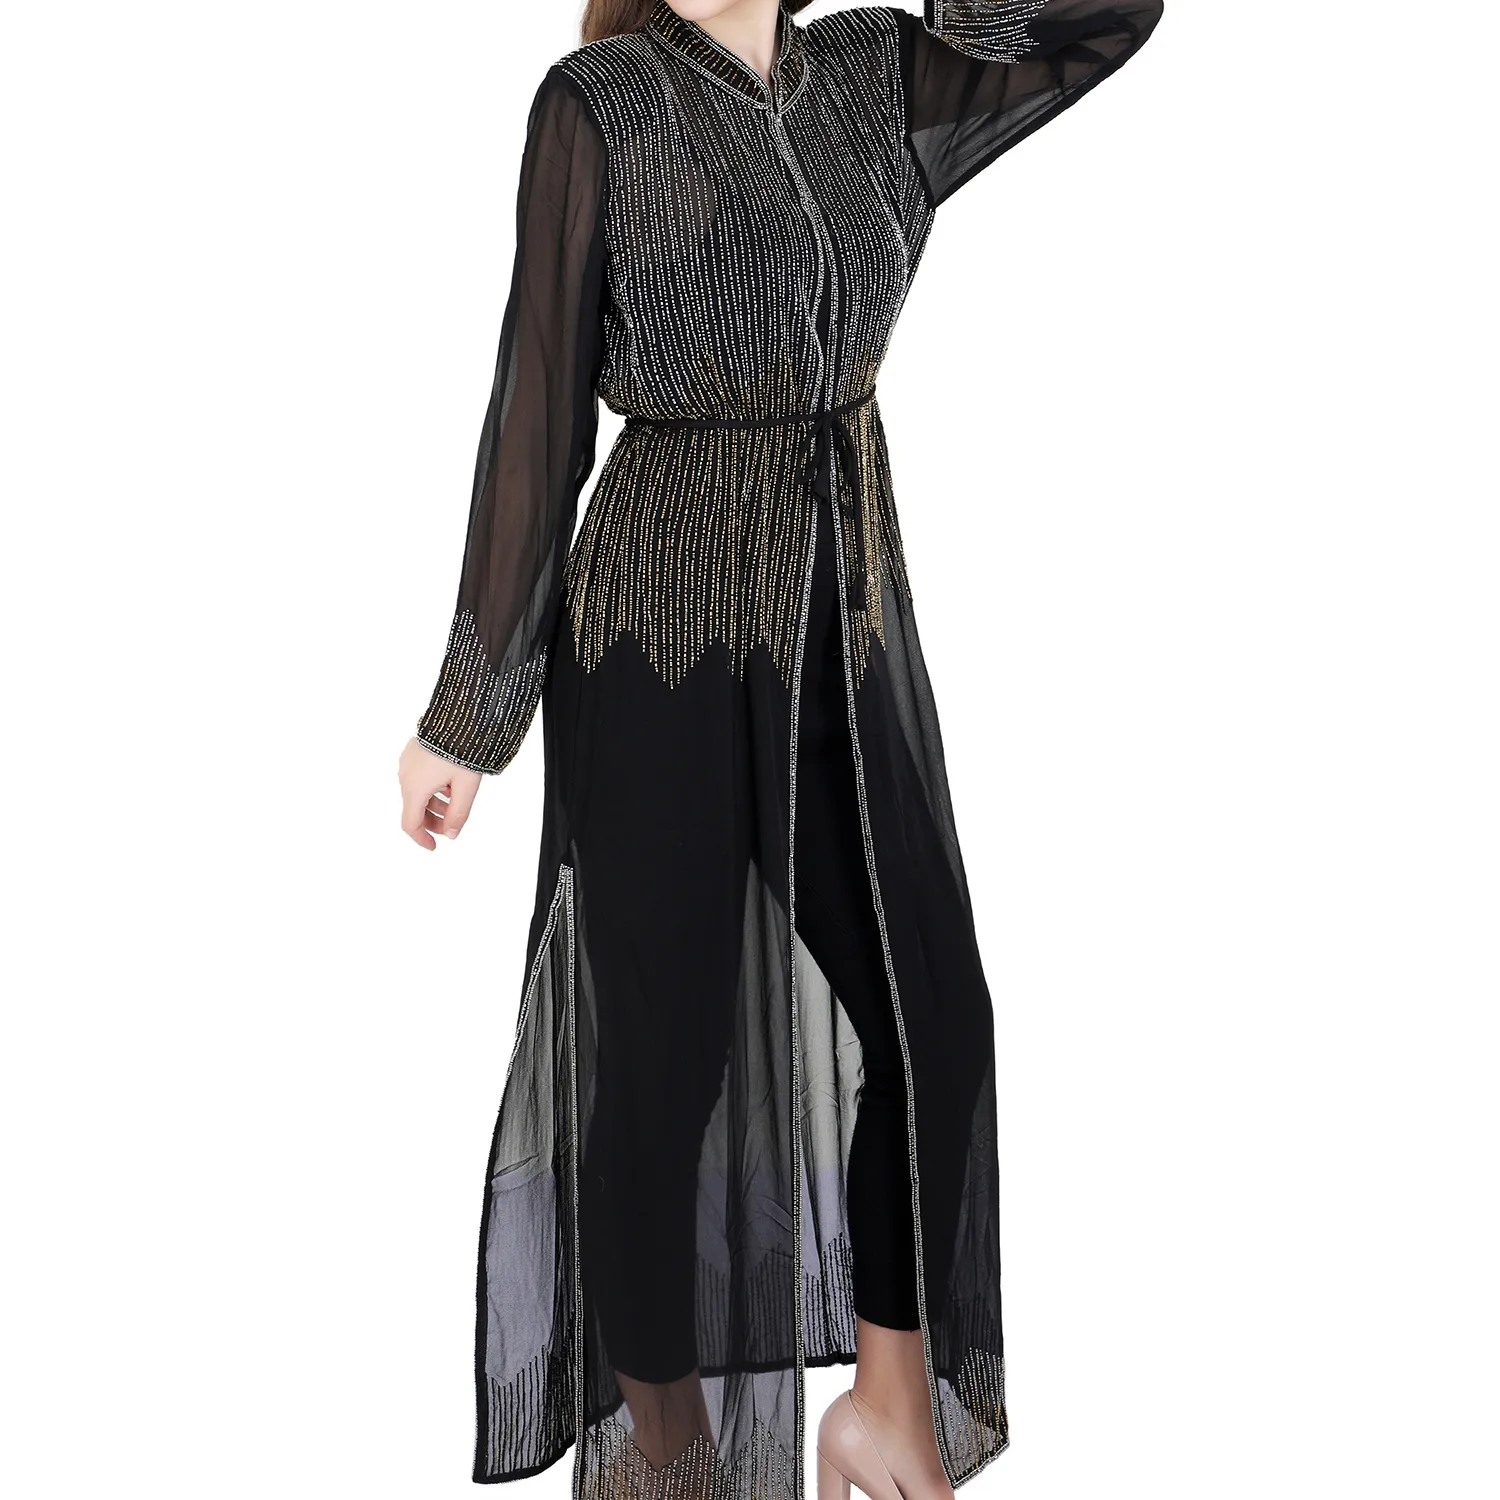 Vestido abaya musculoso feminino, roupa islâmica dubai abaya cardigan bordado à mão